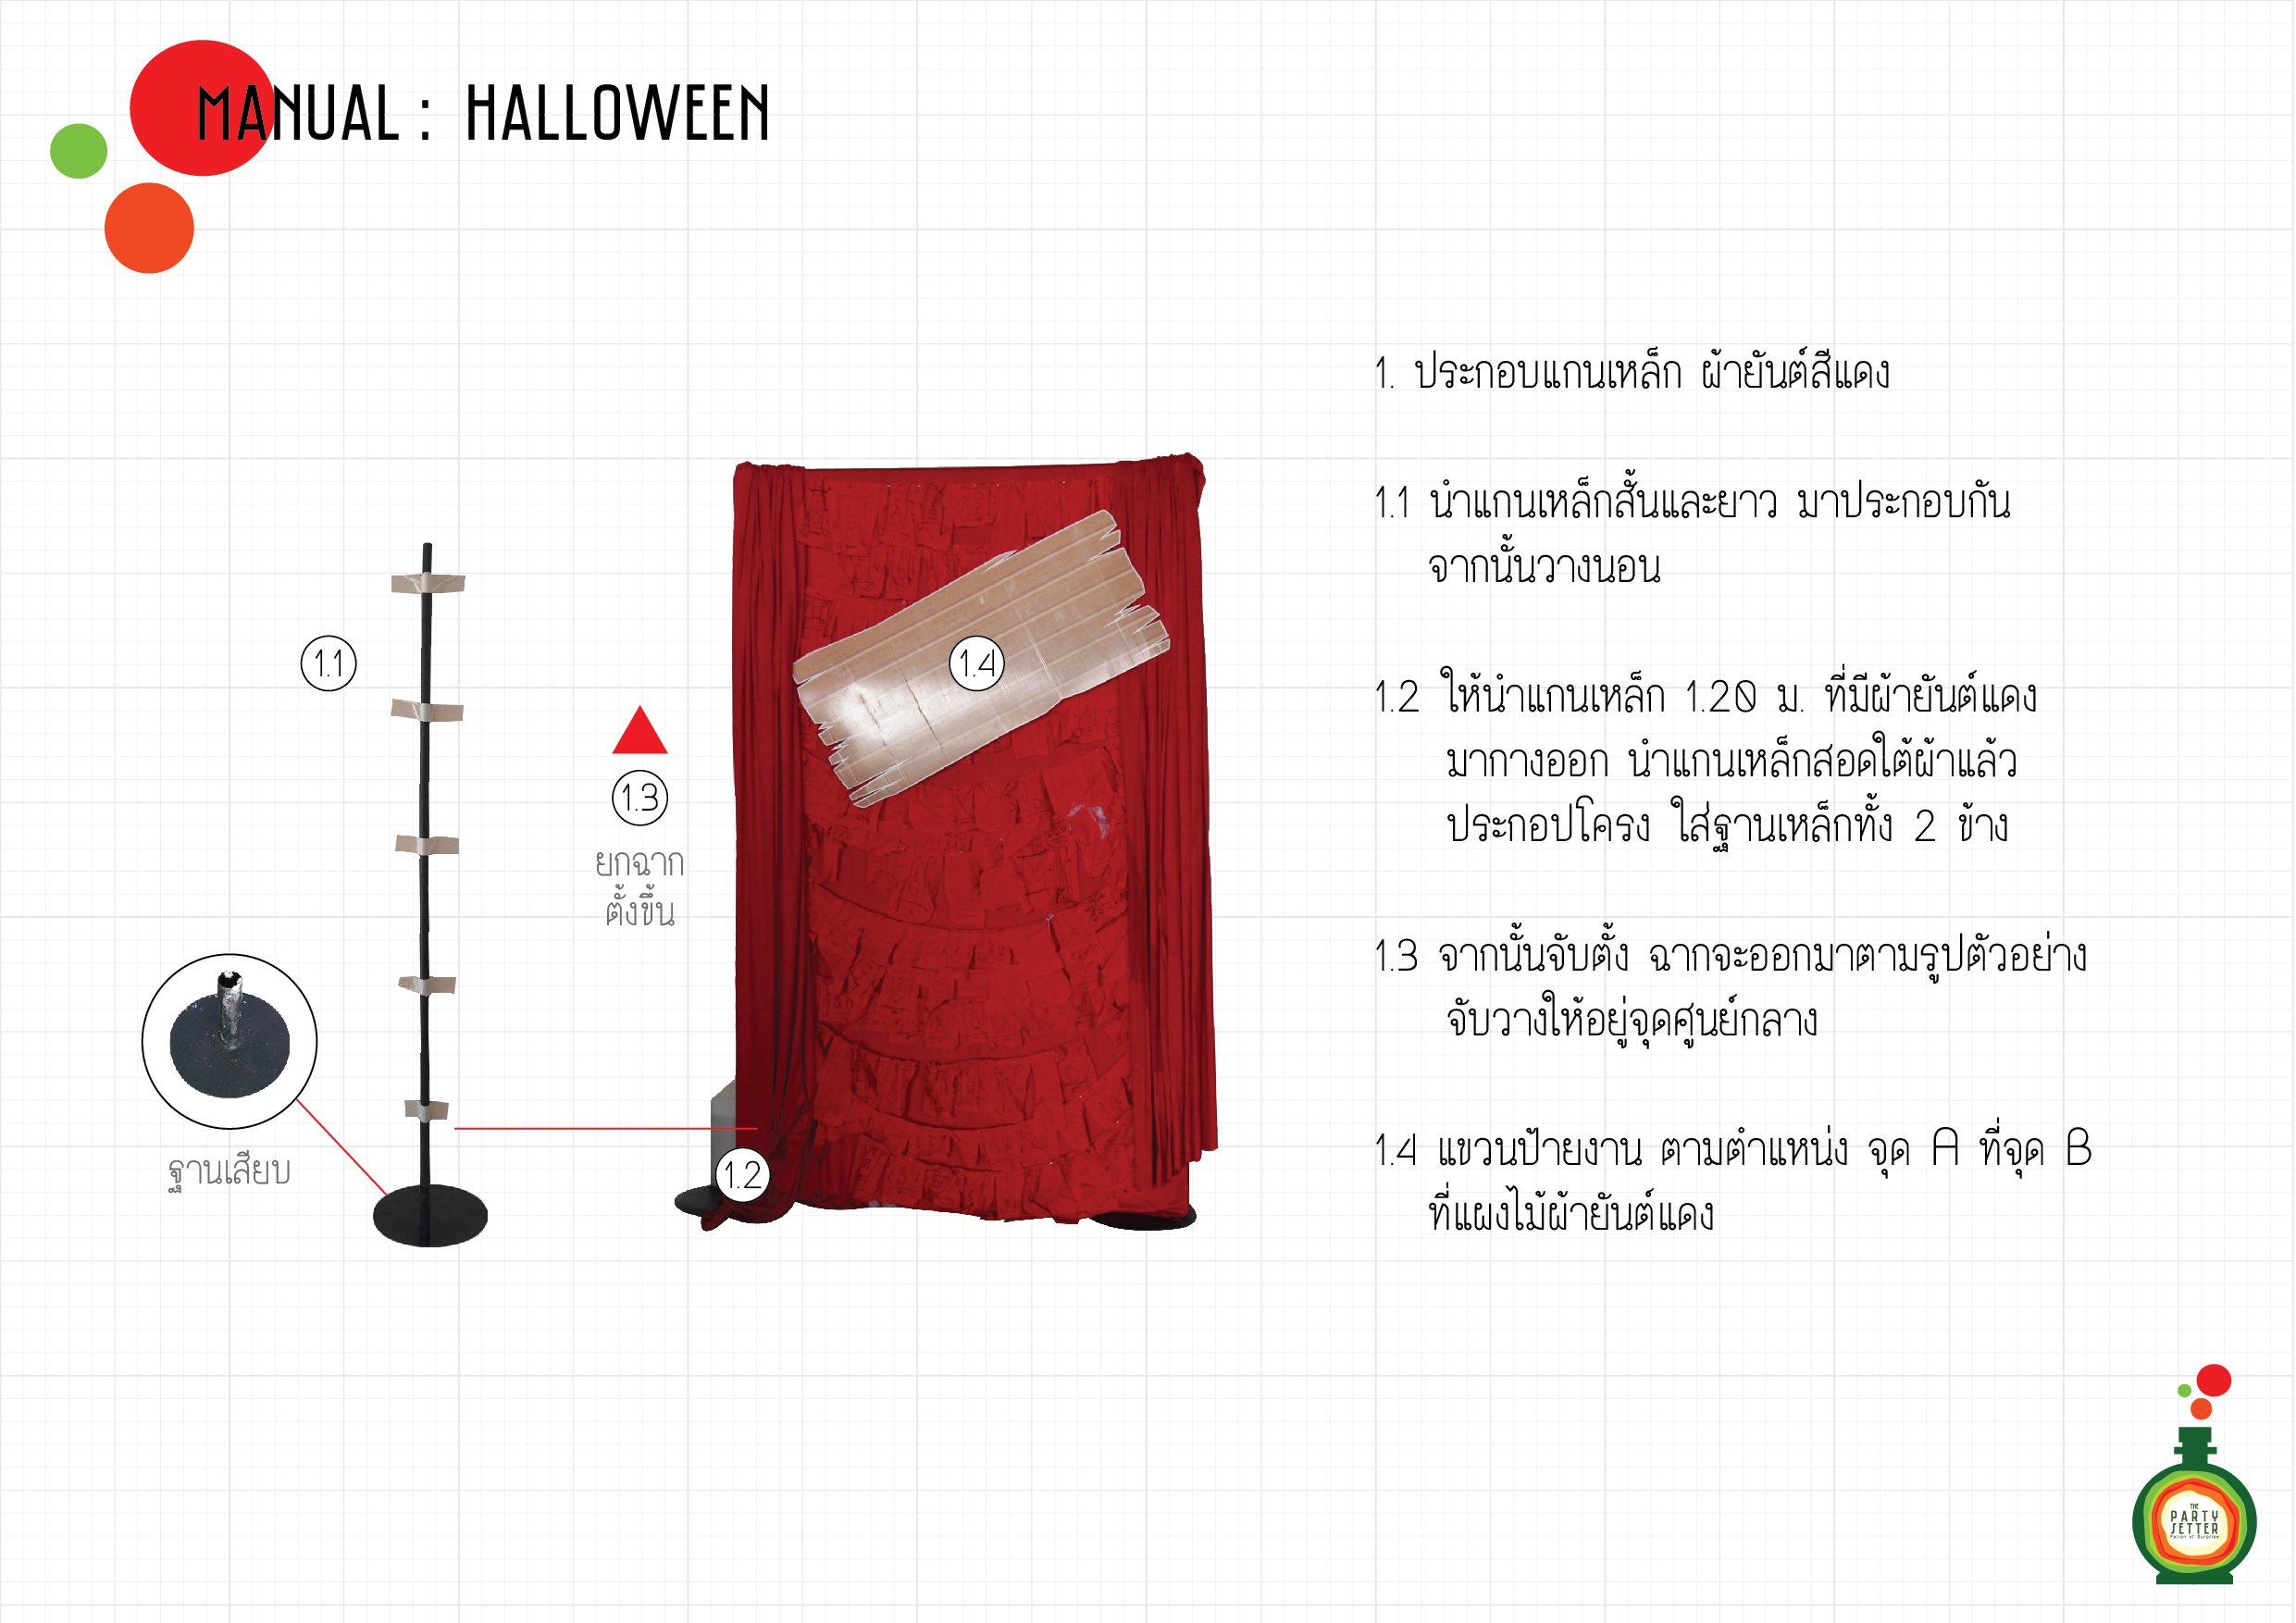 Manual_Halloween_02-01-01.jpg